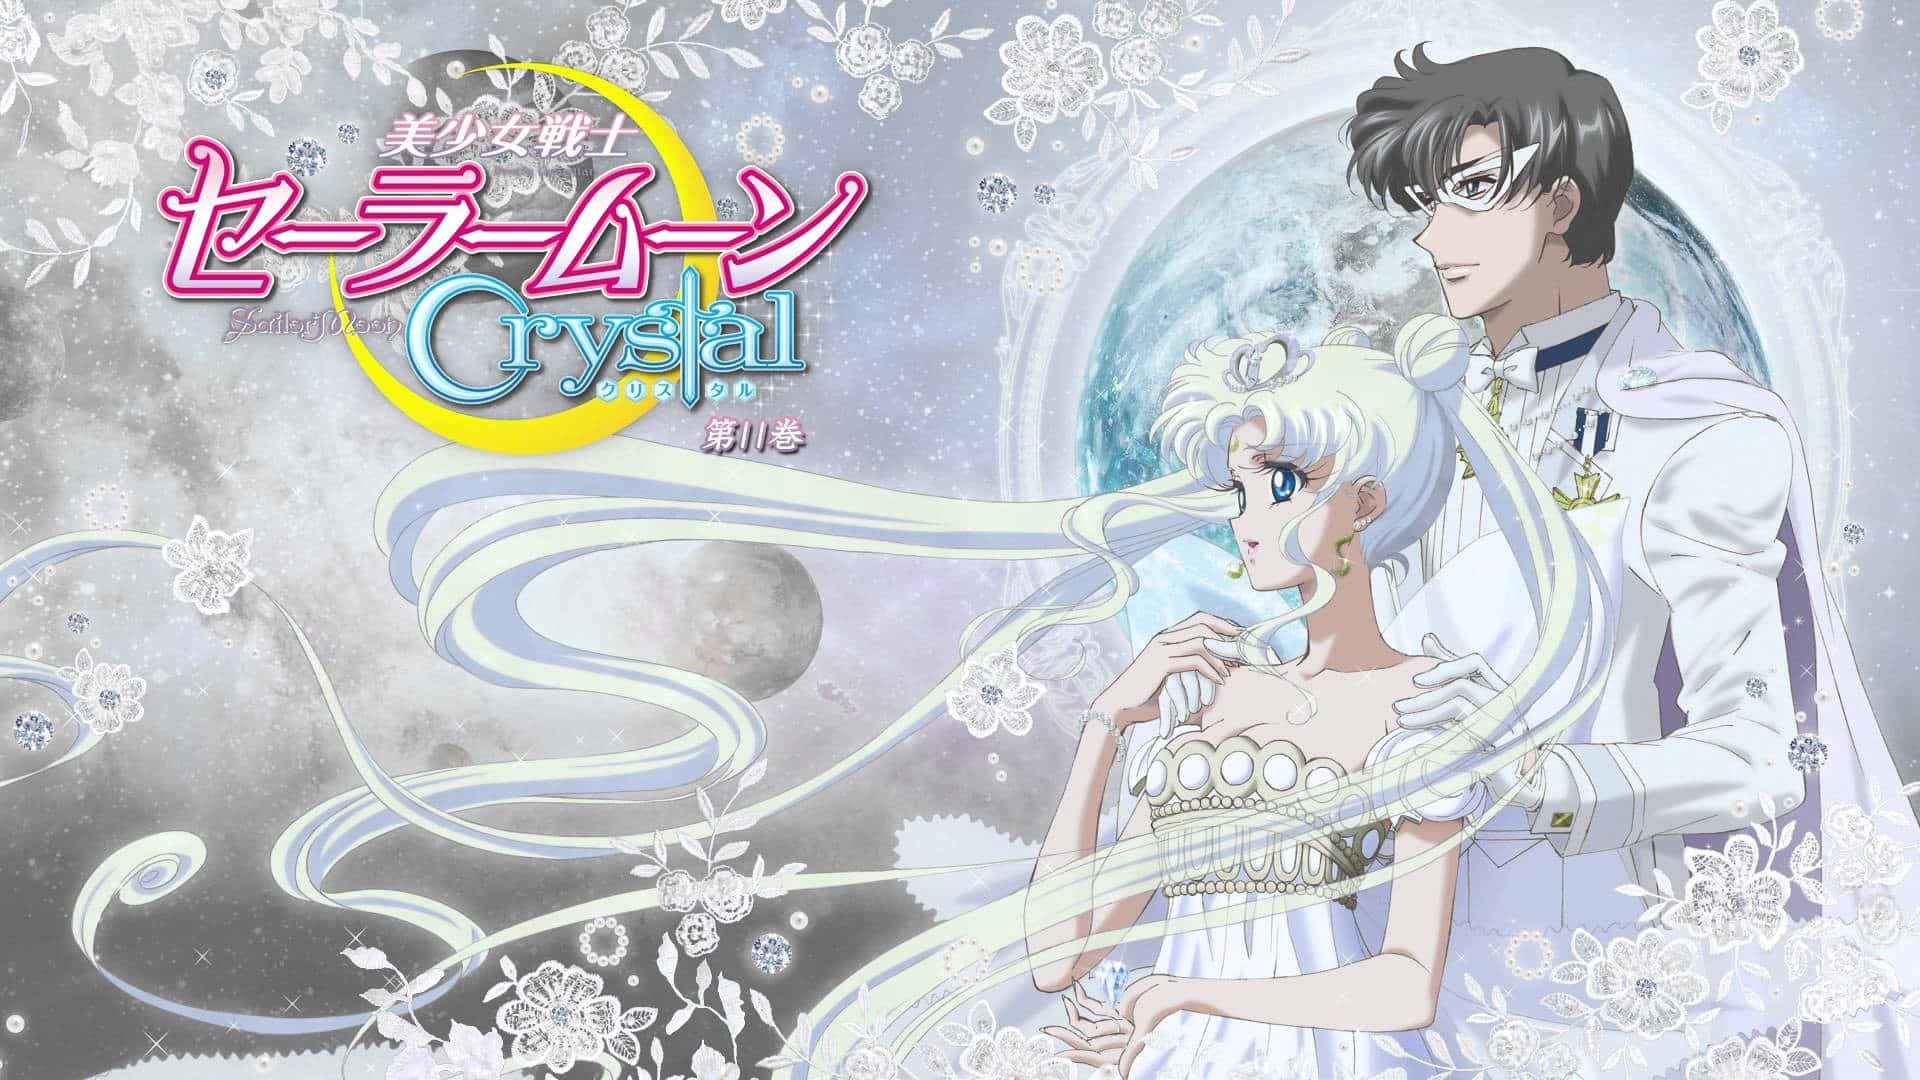 Usagi Tsukino transforms into beautiful Sailor Moon to save the world Wallpaper